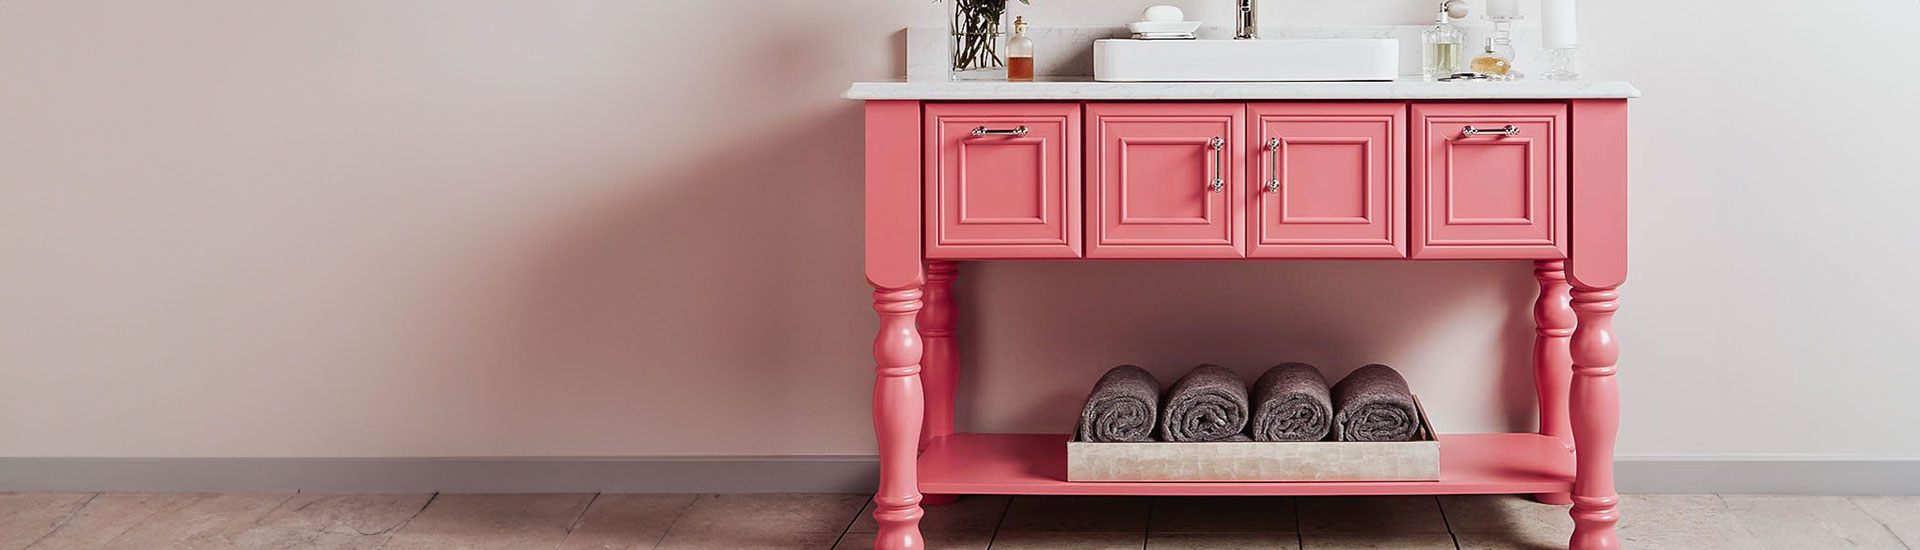 Pink Bathroom Cabinet Wraps